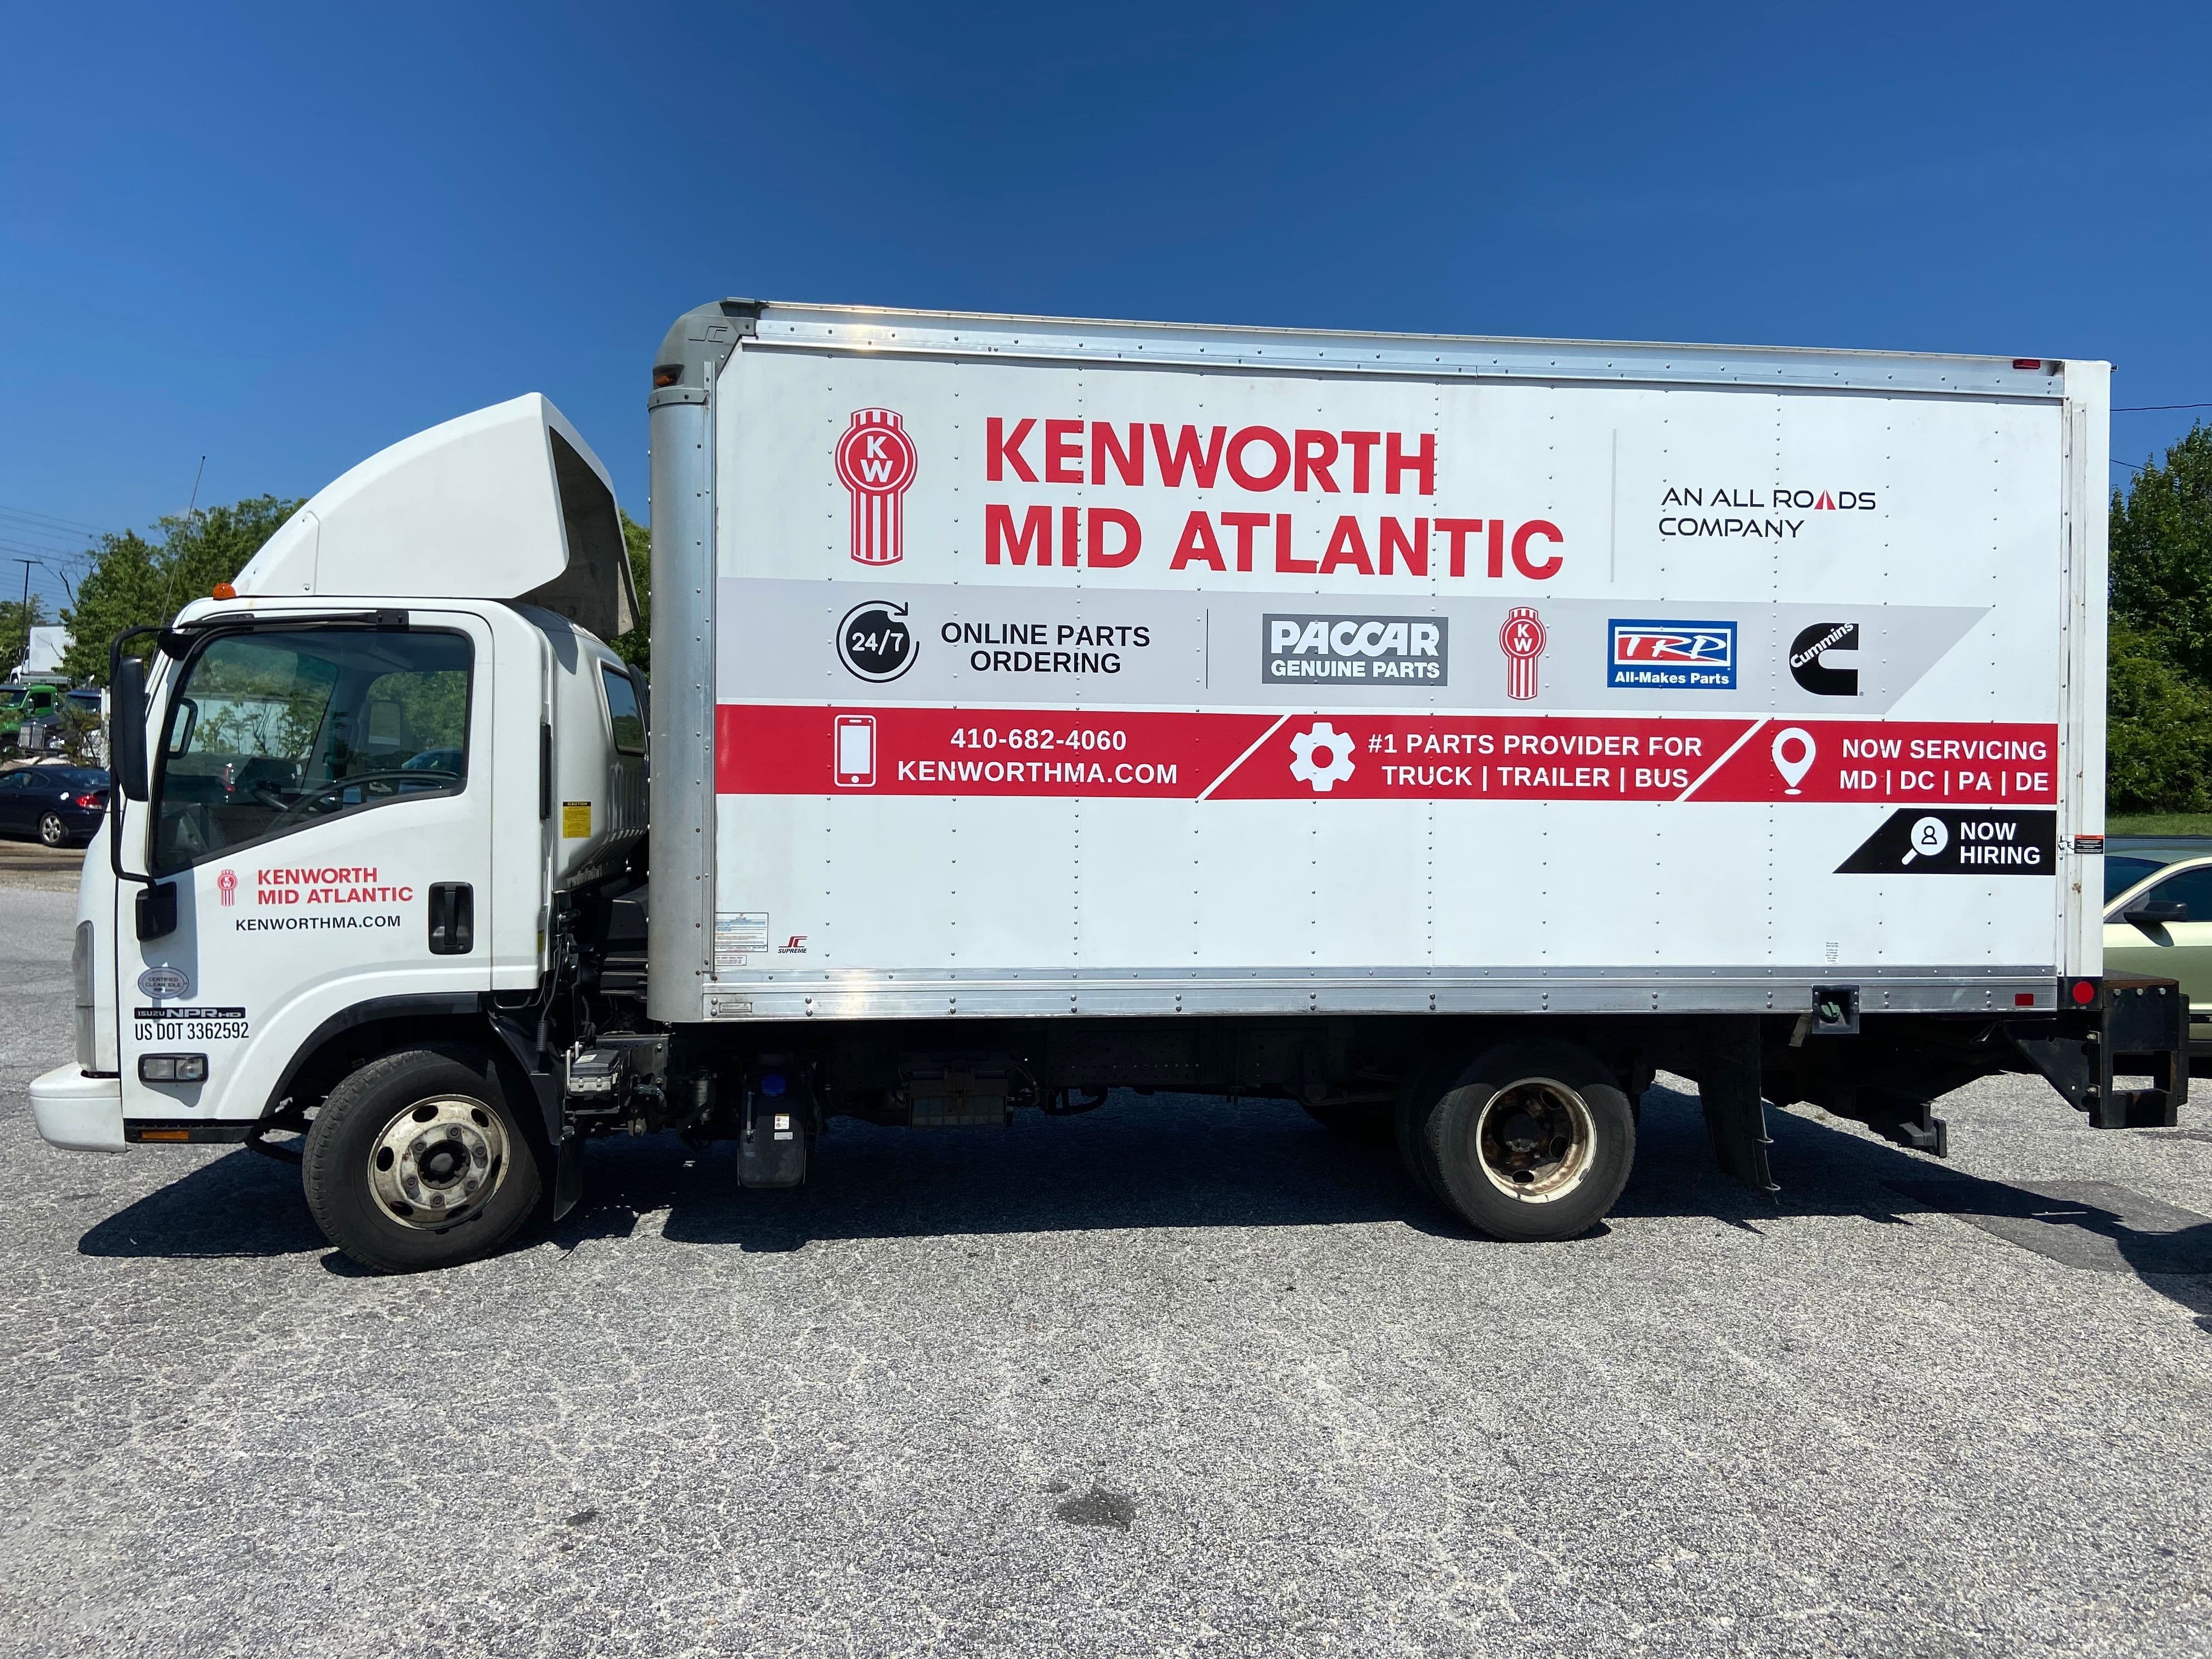 Kenworth Mid Atlantic Signage on a Truck